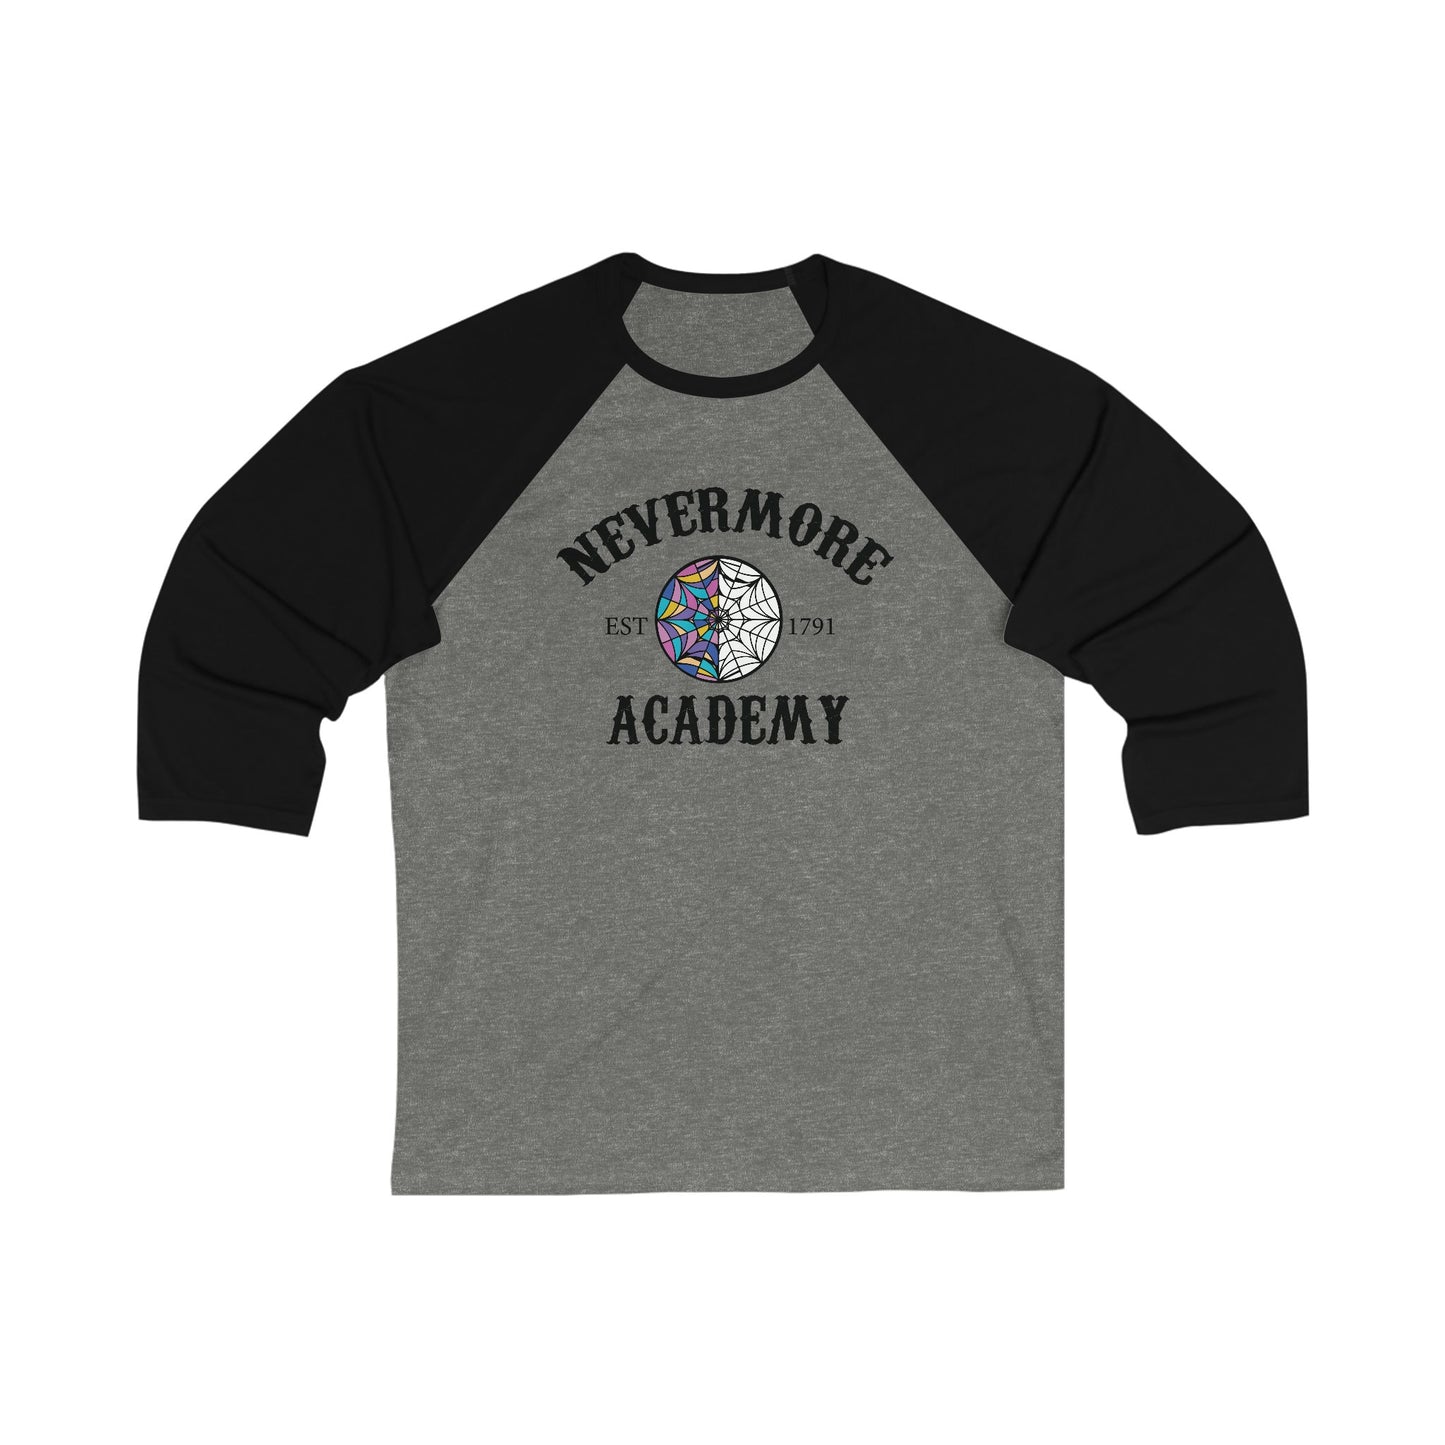 Nevermore Academy, Nevermore shirt, Wednesday shirt, Wednesday Addams, Wednesday merch, Horror shirt, Addams family